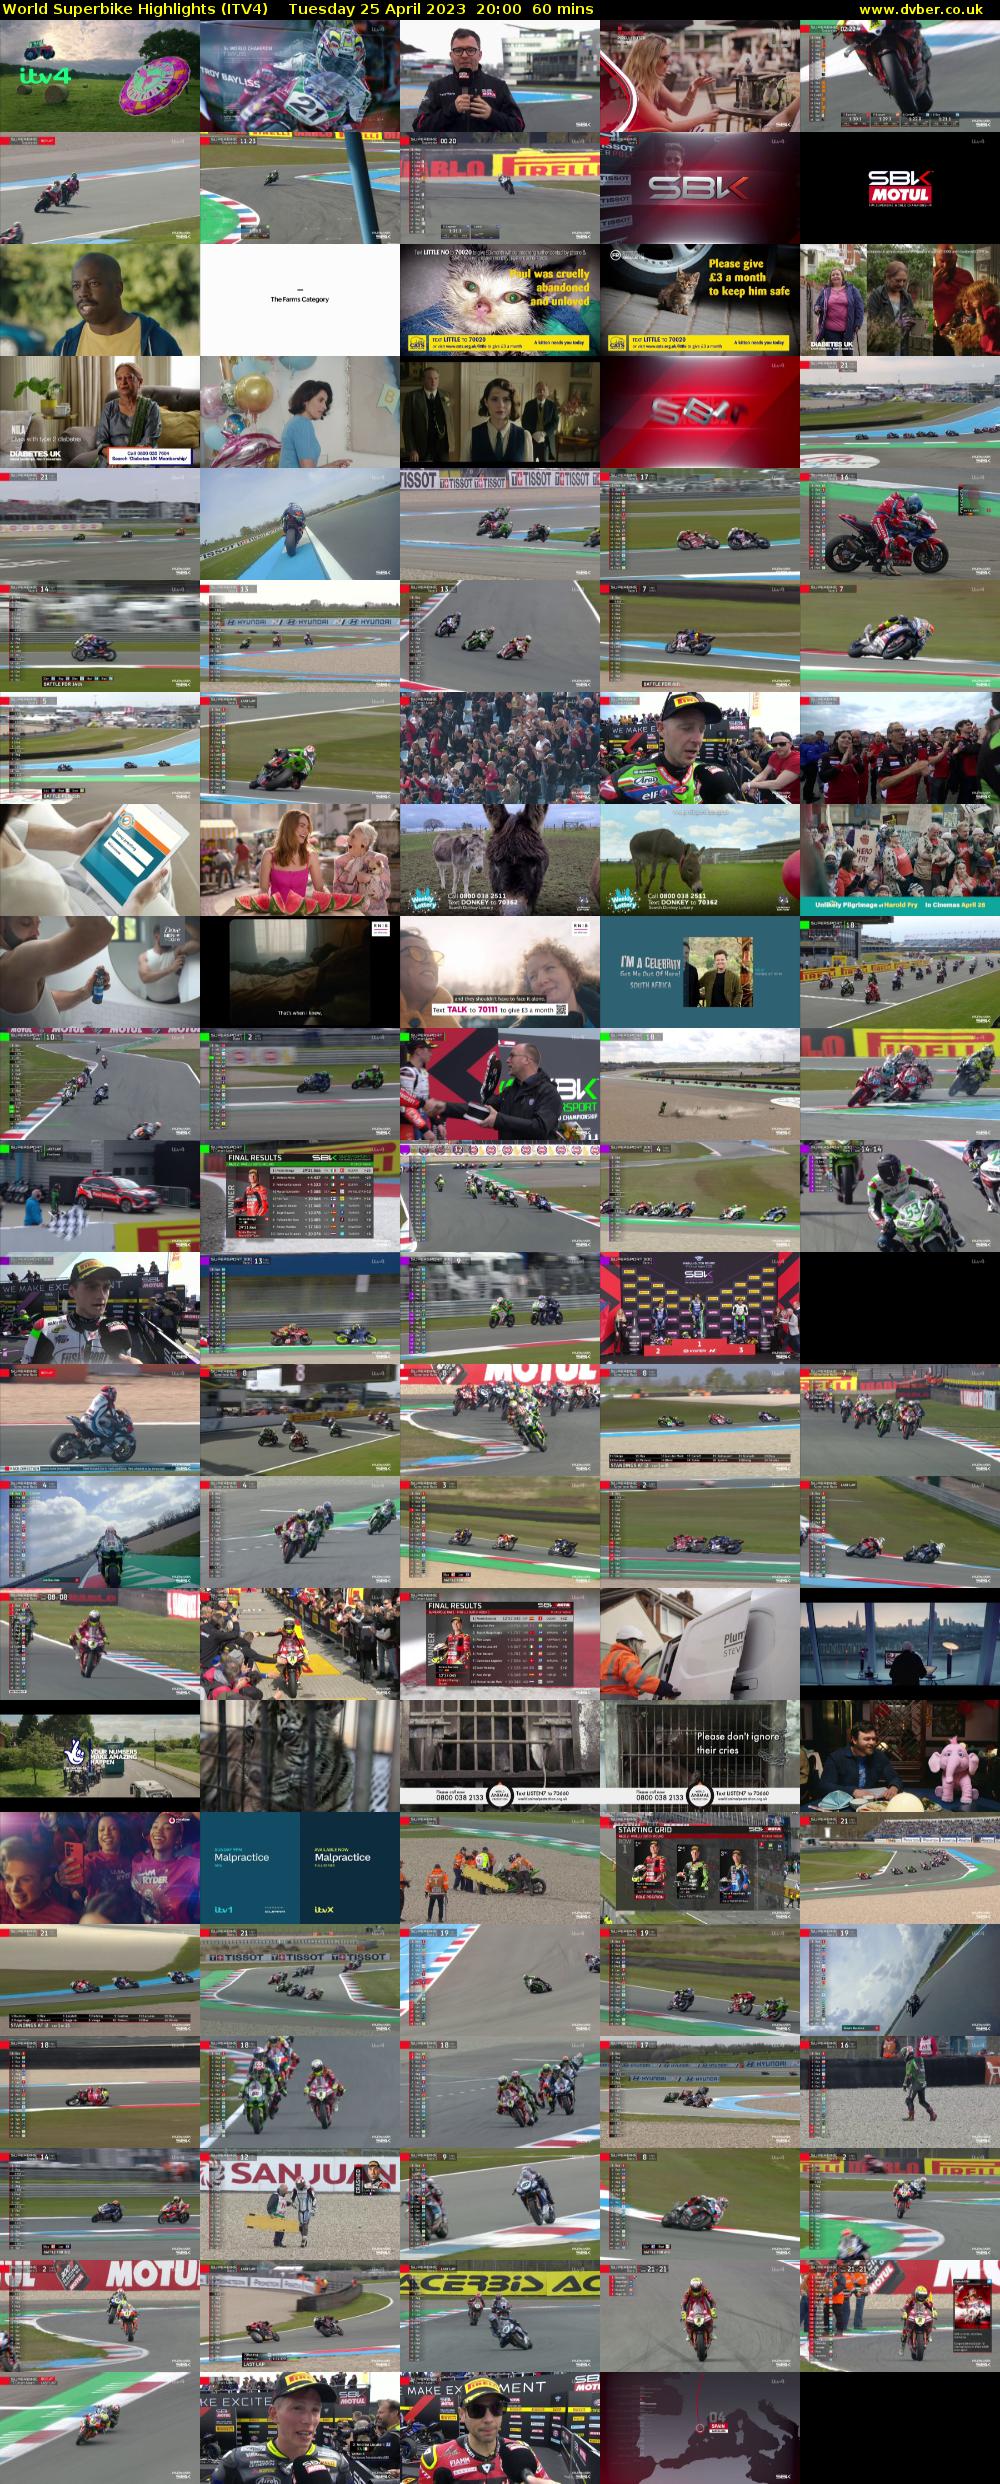 World Superbike Highlights (ITV4) Tuesday 25 April 2023 20:00 - 21:00